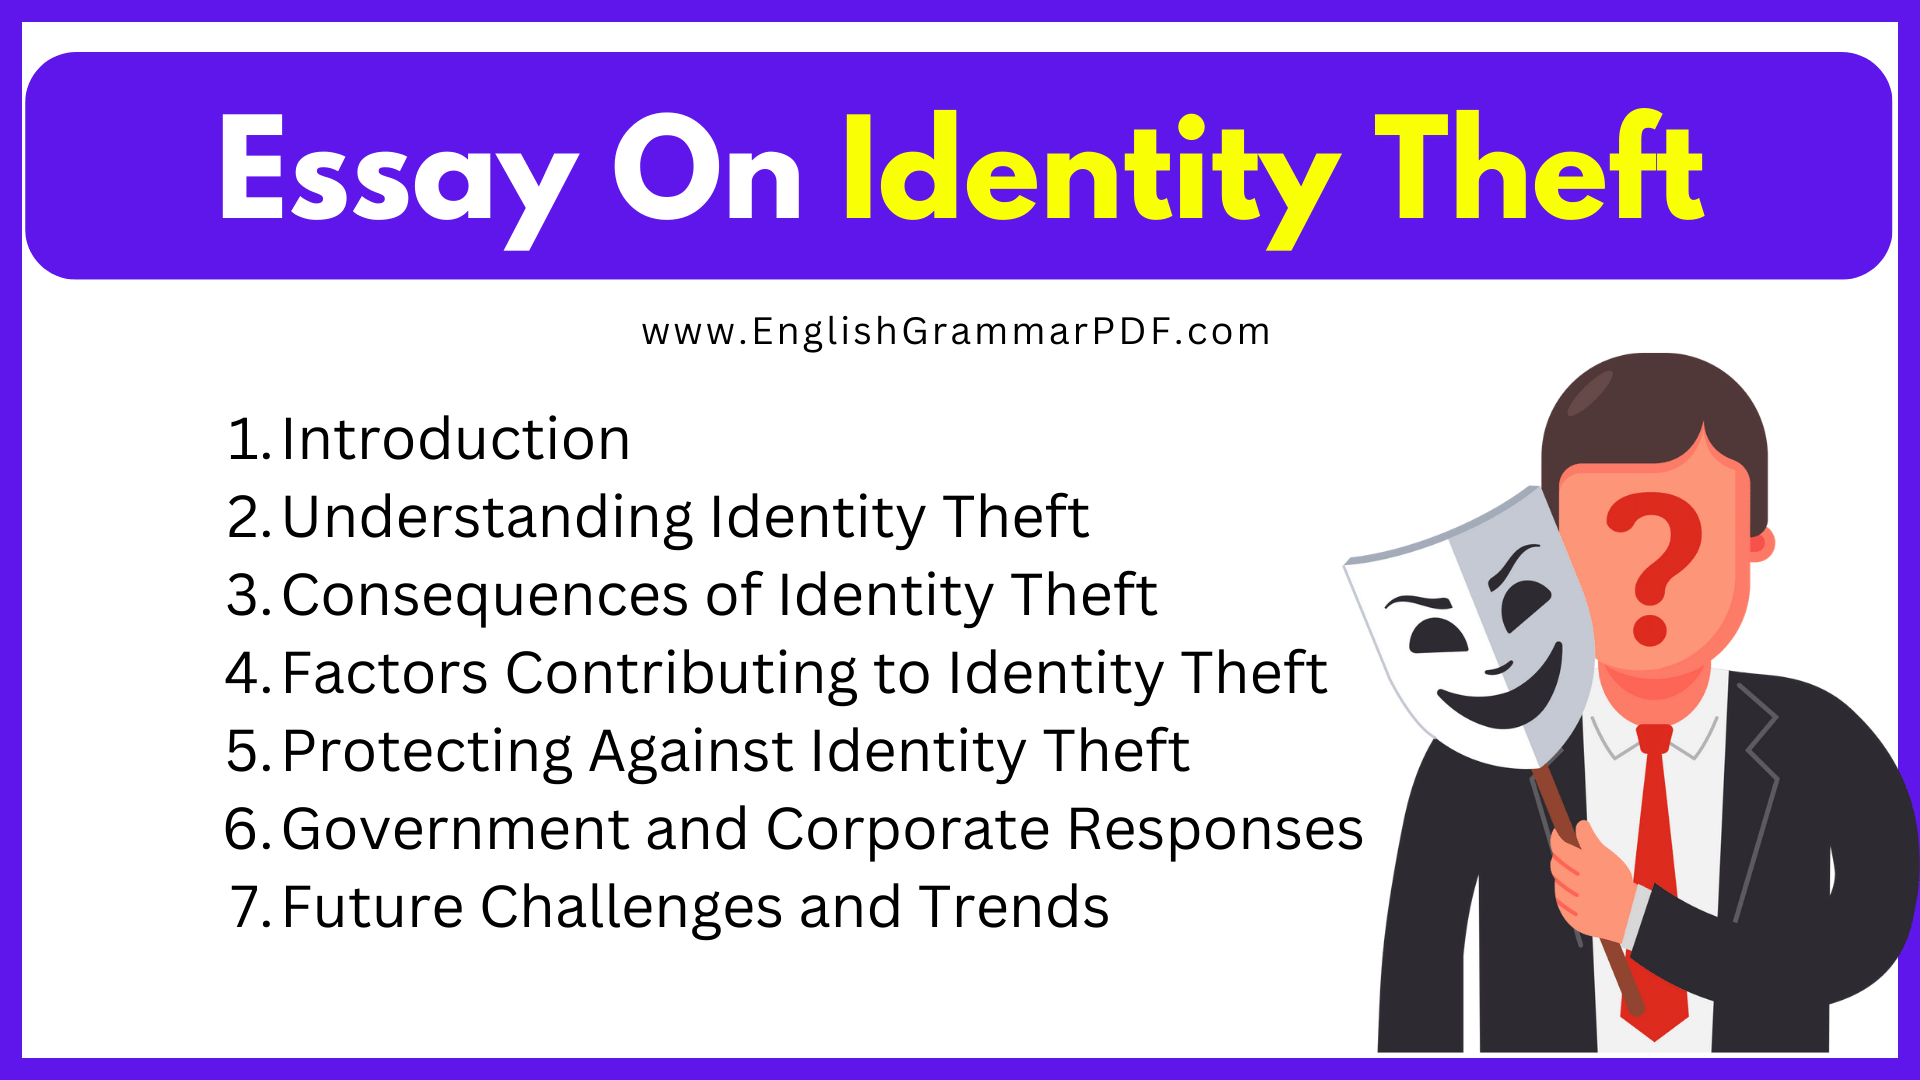 Essay On Identity Theft